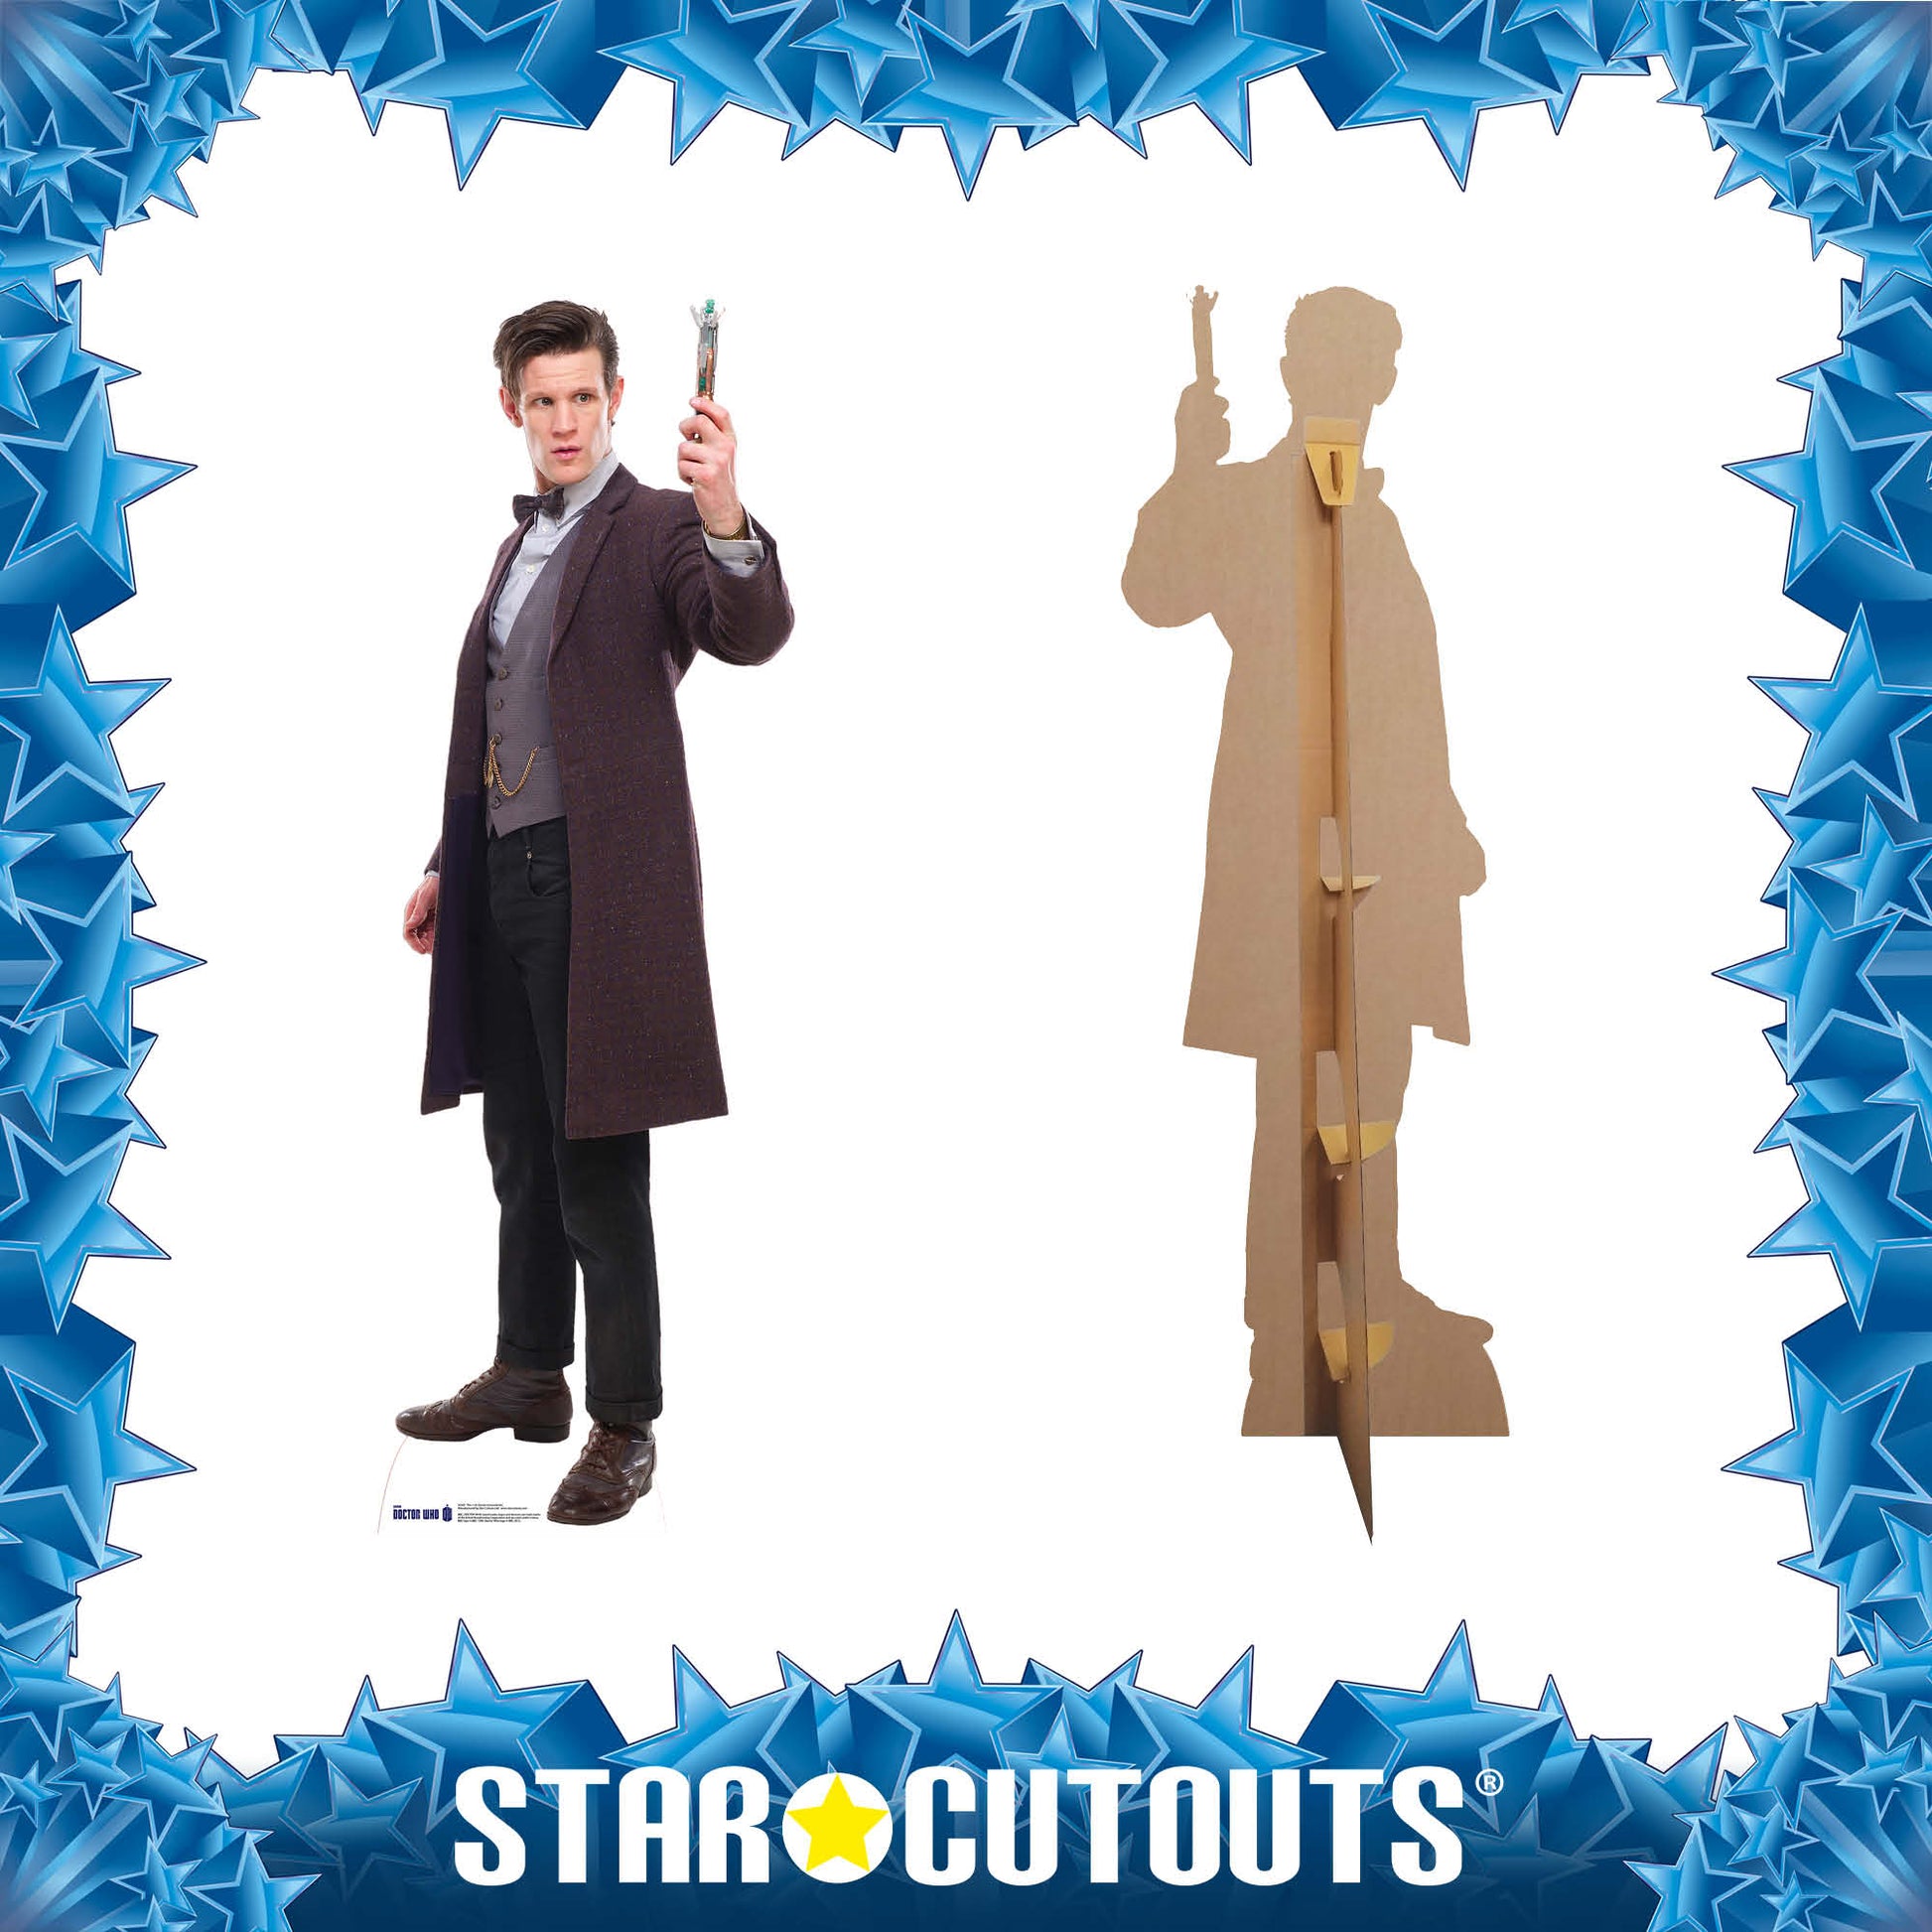 The 11th Doctor 2013 Screwdriver Matt Smith Cardboard Cut Out Height 180cm - Star Cutouts